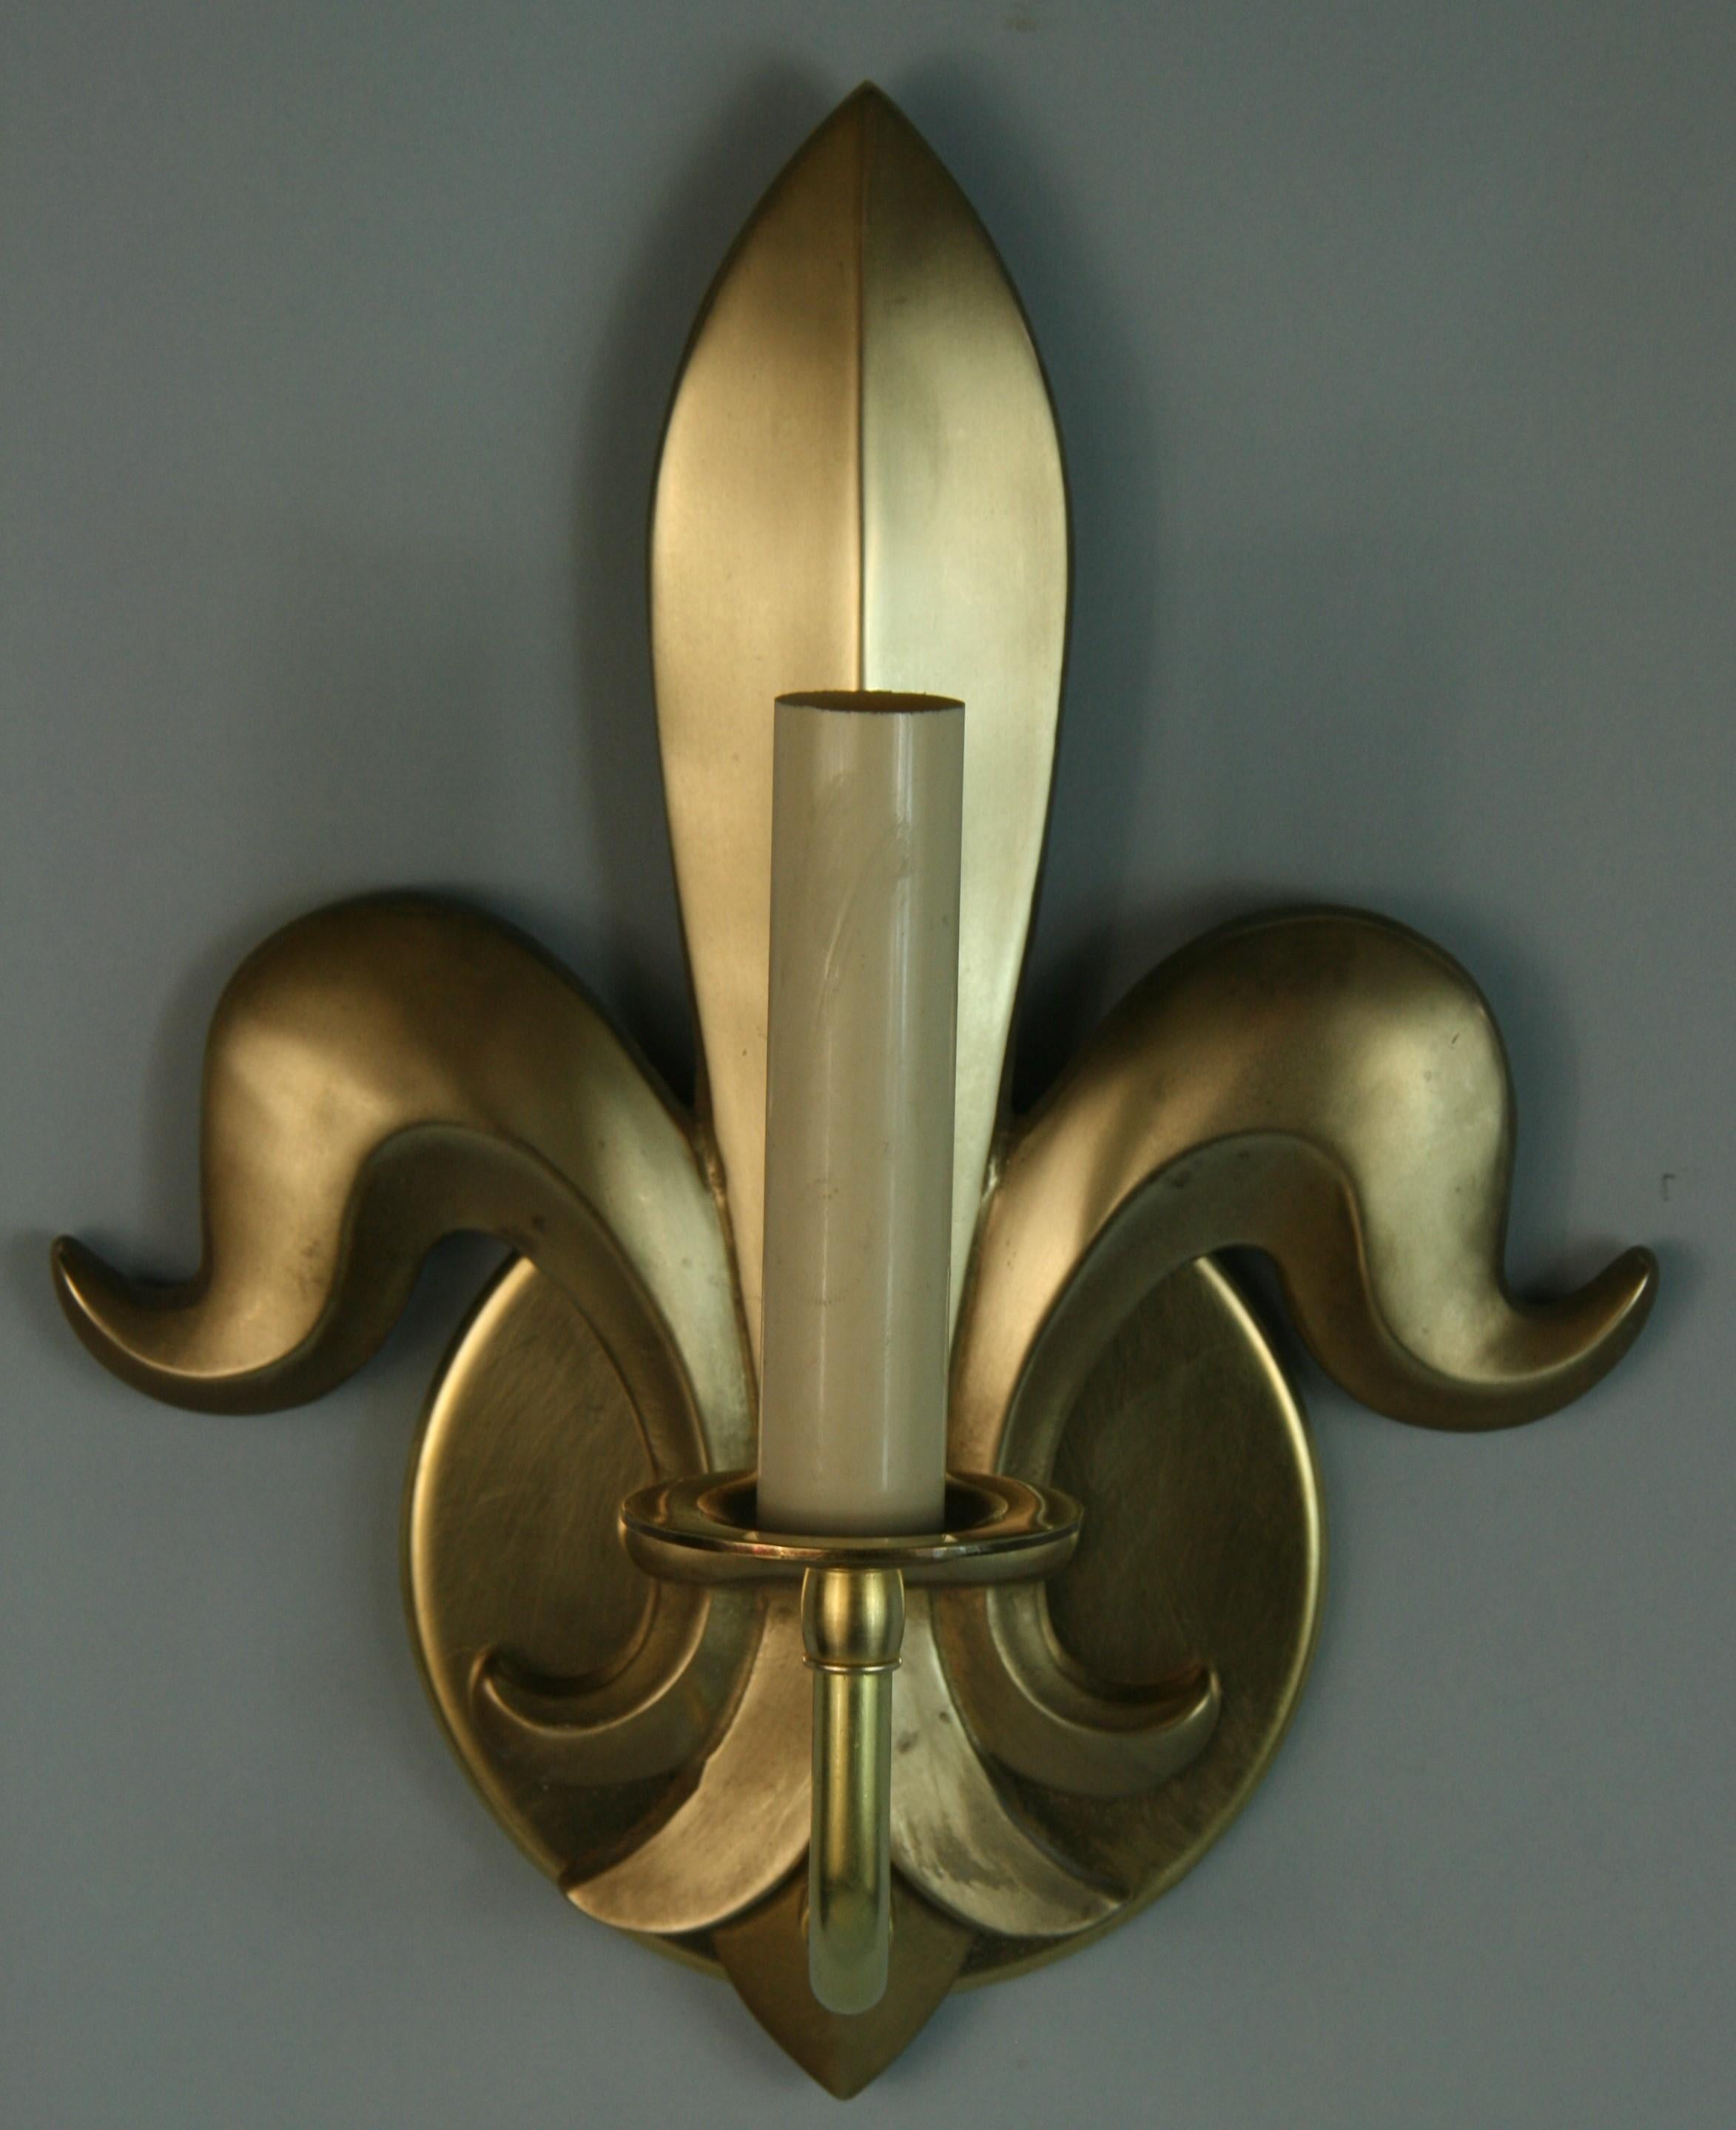 1607 French brass fleur de leis wall sconce a pair
Rewired takes one 60 watt max candelabra base bulb